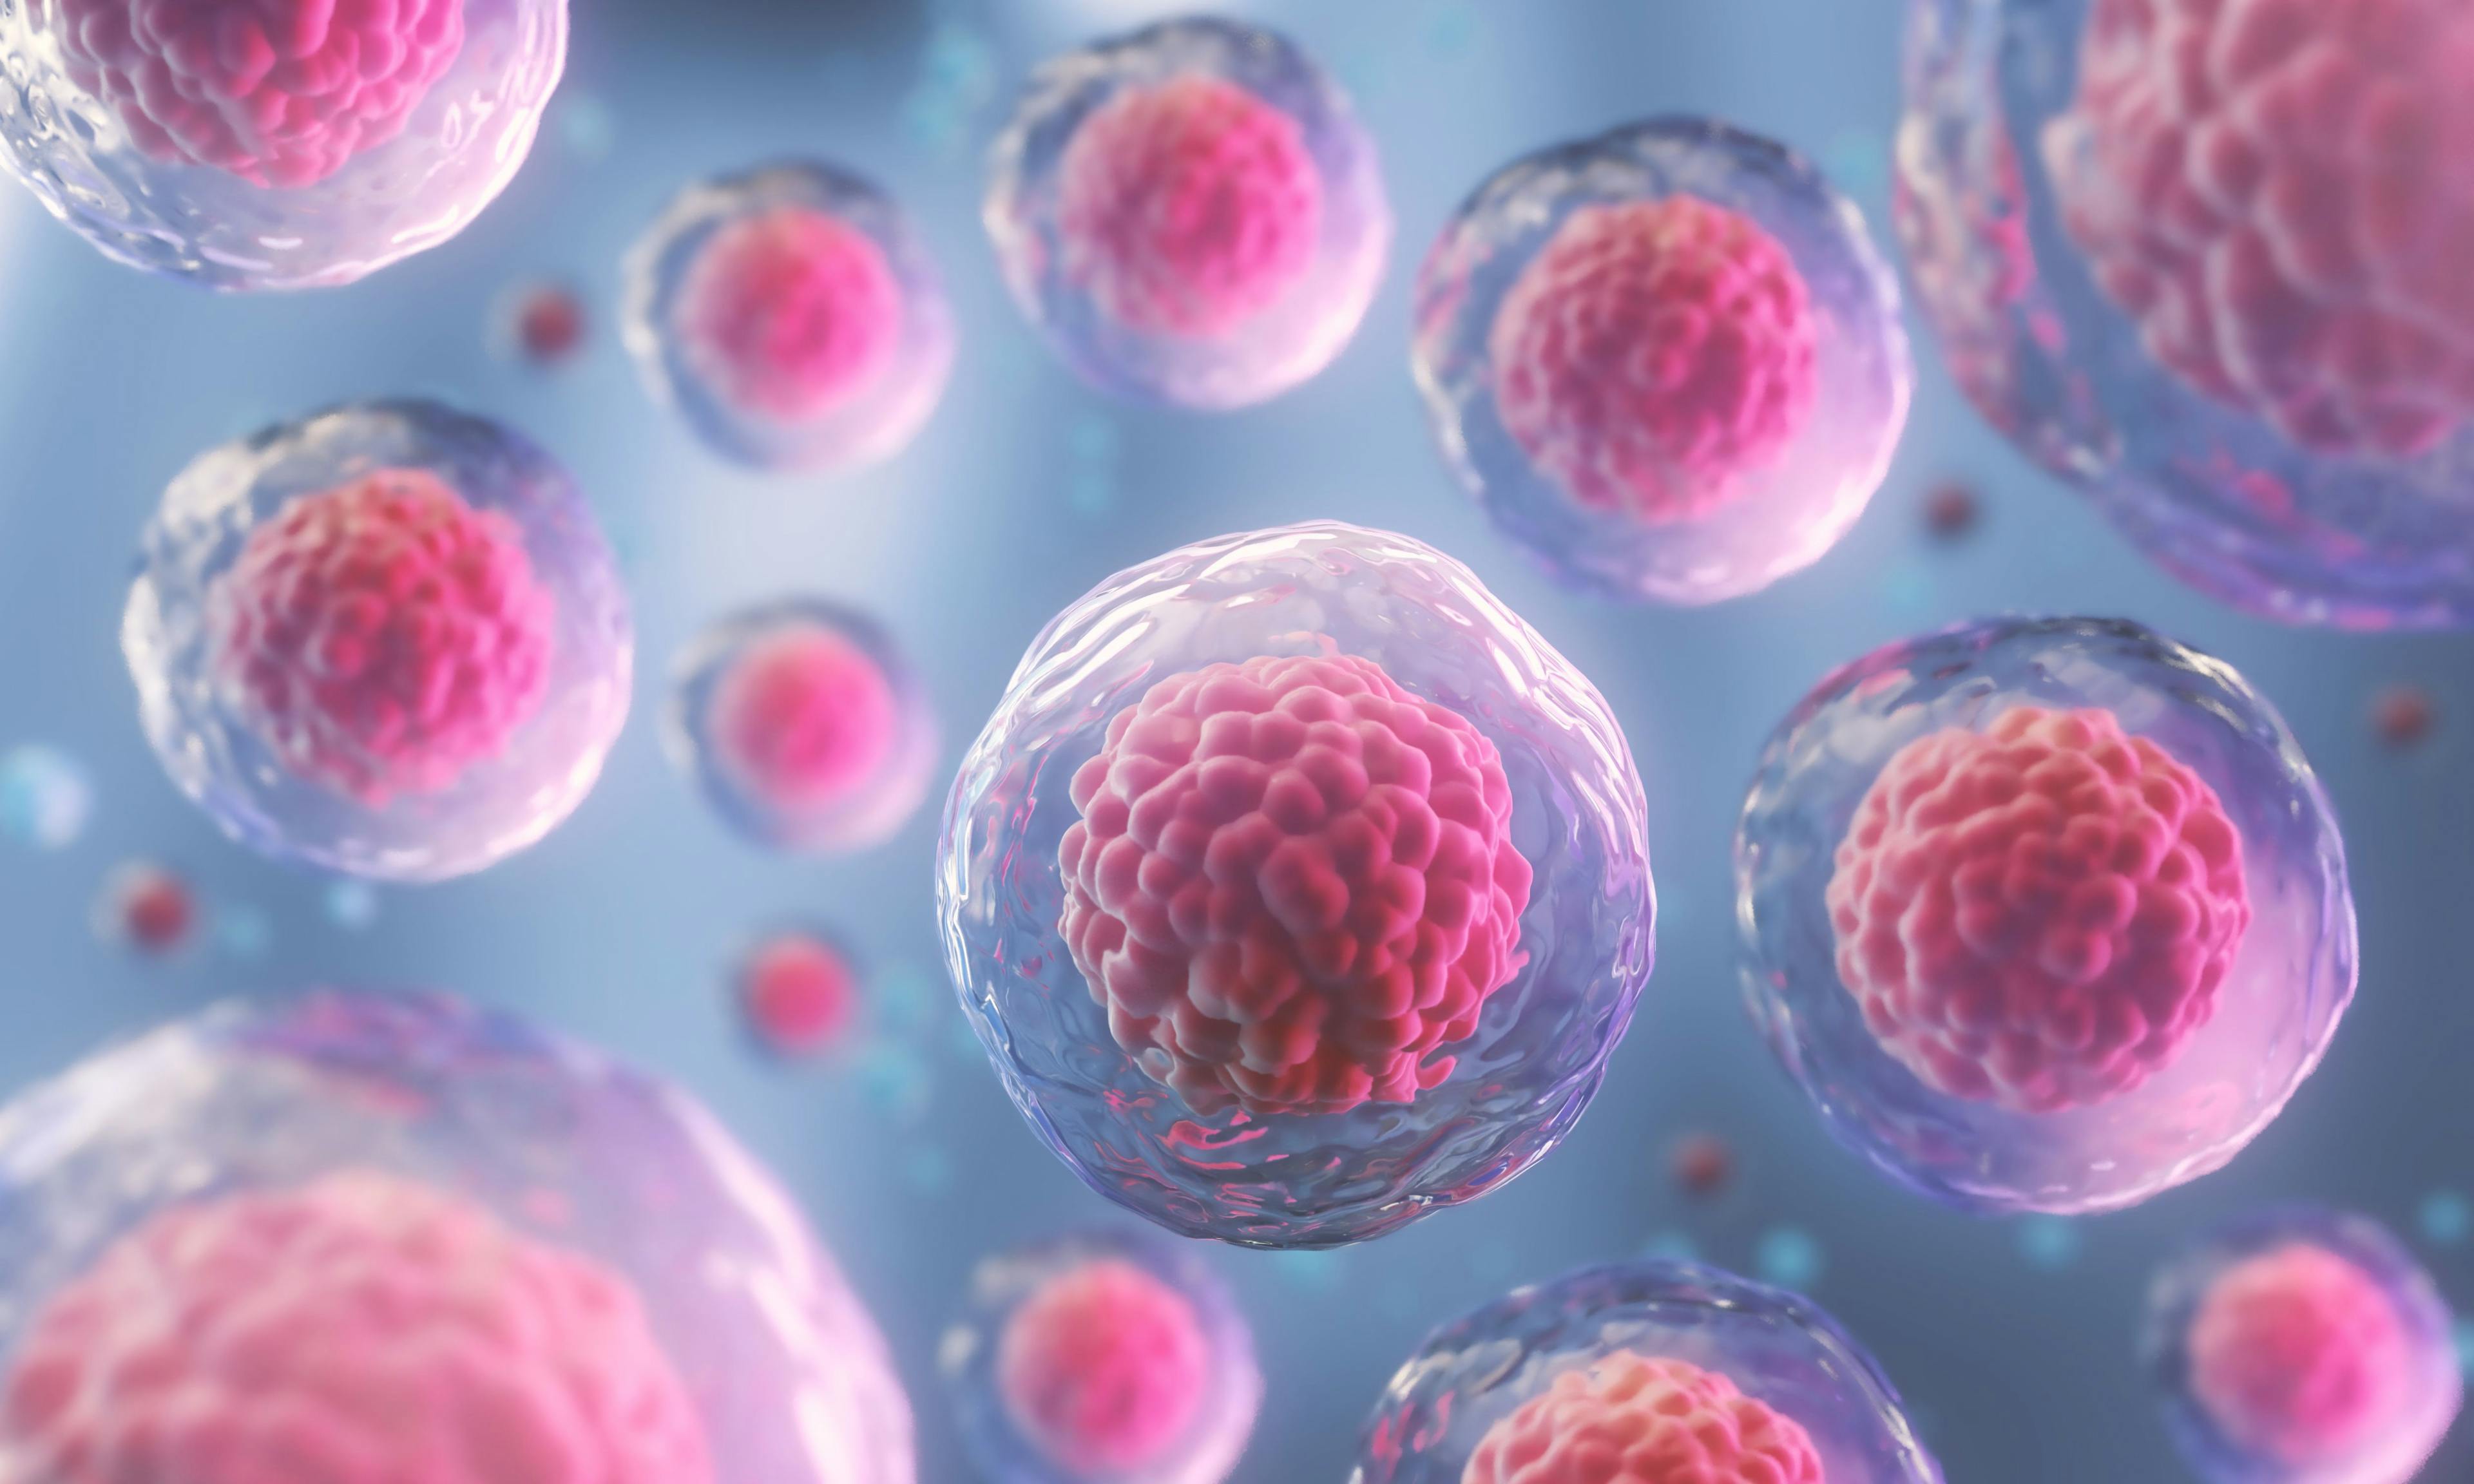 Cancer cells | Image credit: Anusorn - stock.adobe.com 